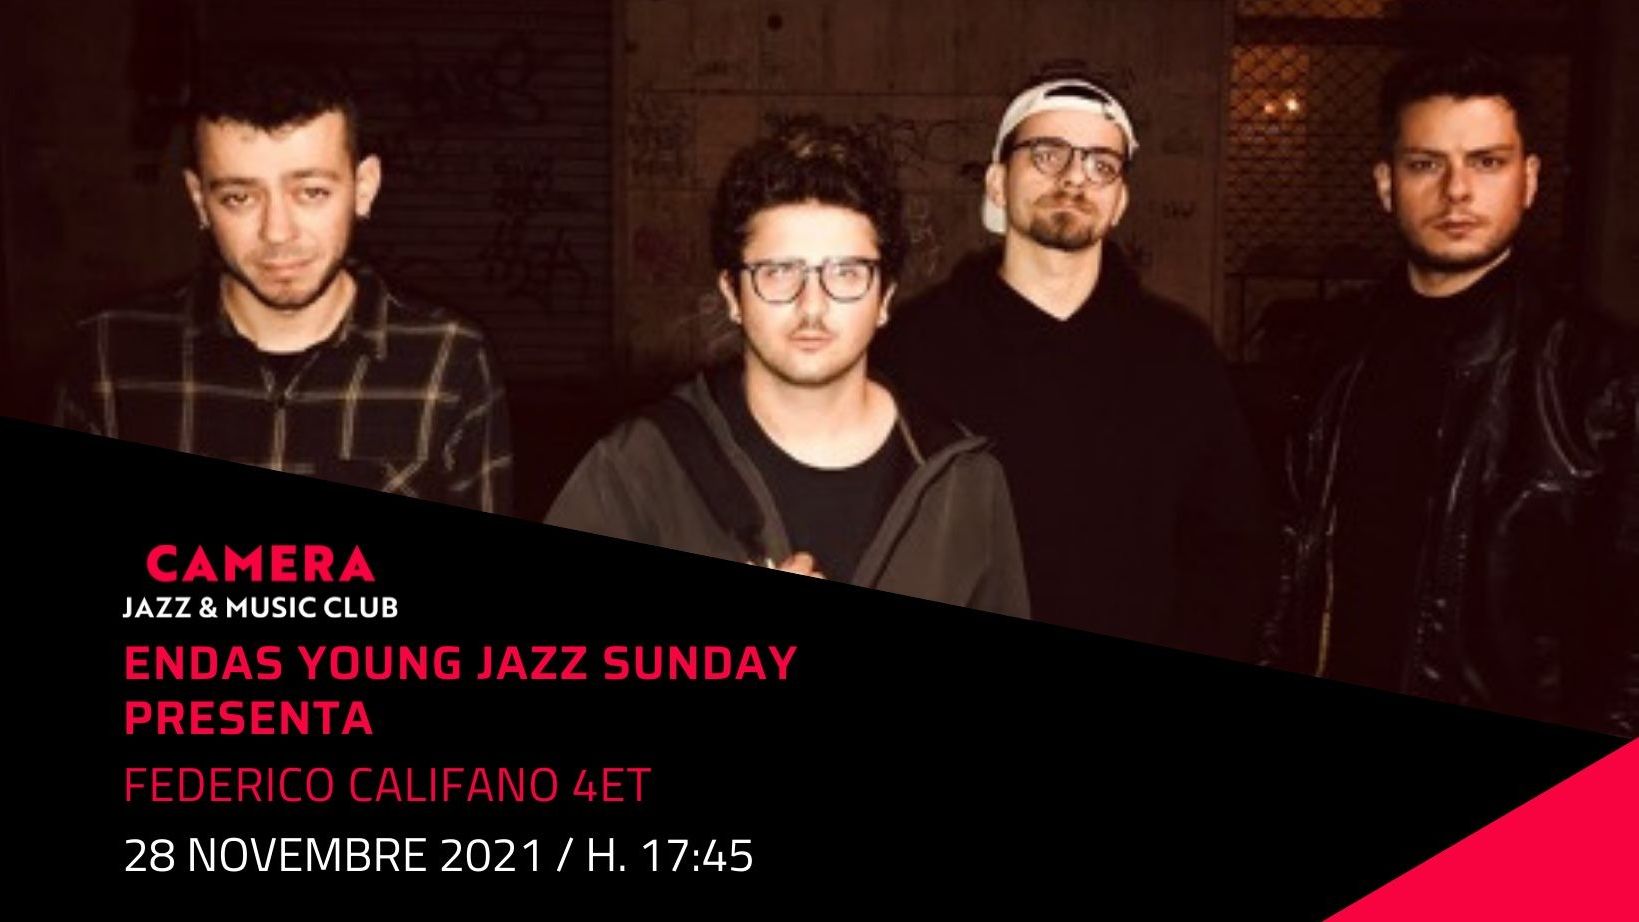 Endas Young Jazz Sunday presenta “Federico Califano 4et”